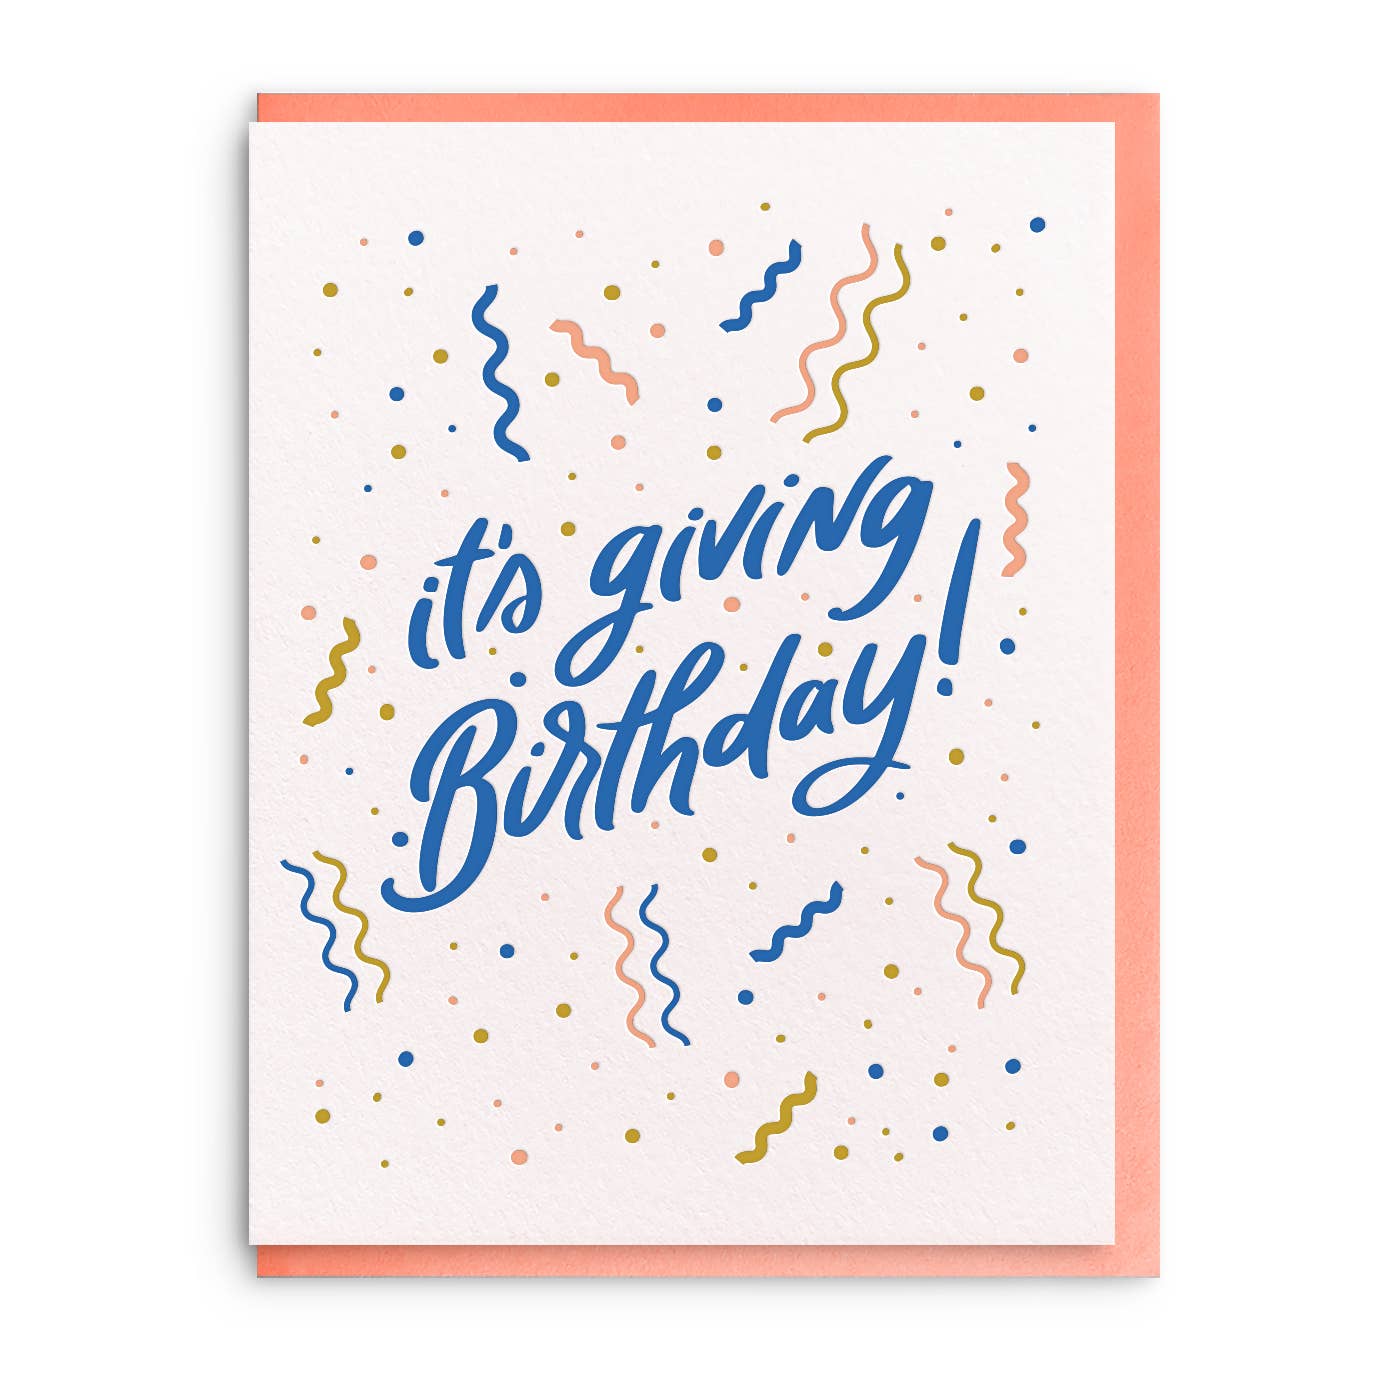 Giving Birthday - Letterpress Birthday Greeting Card